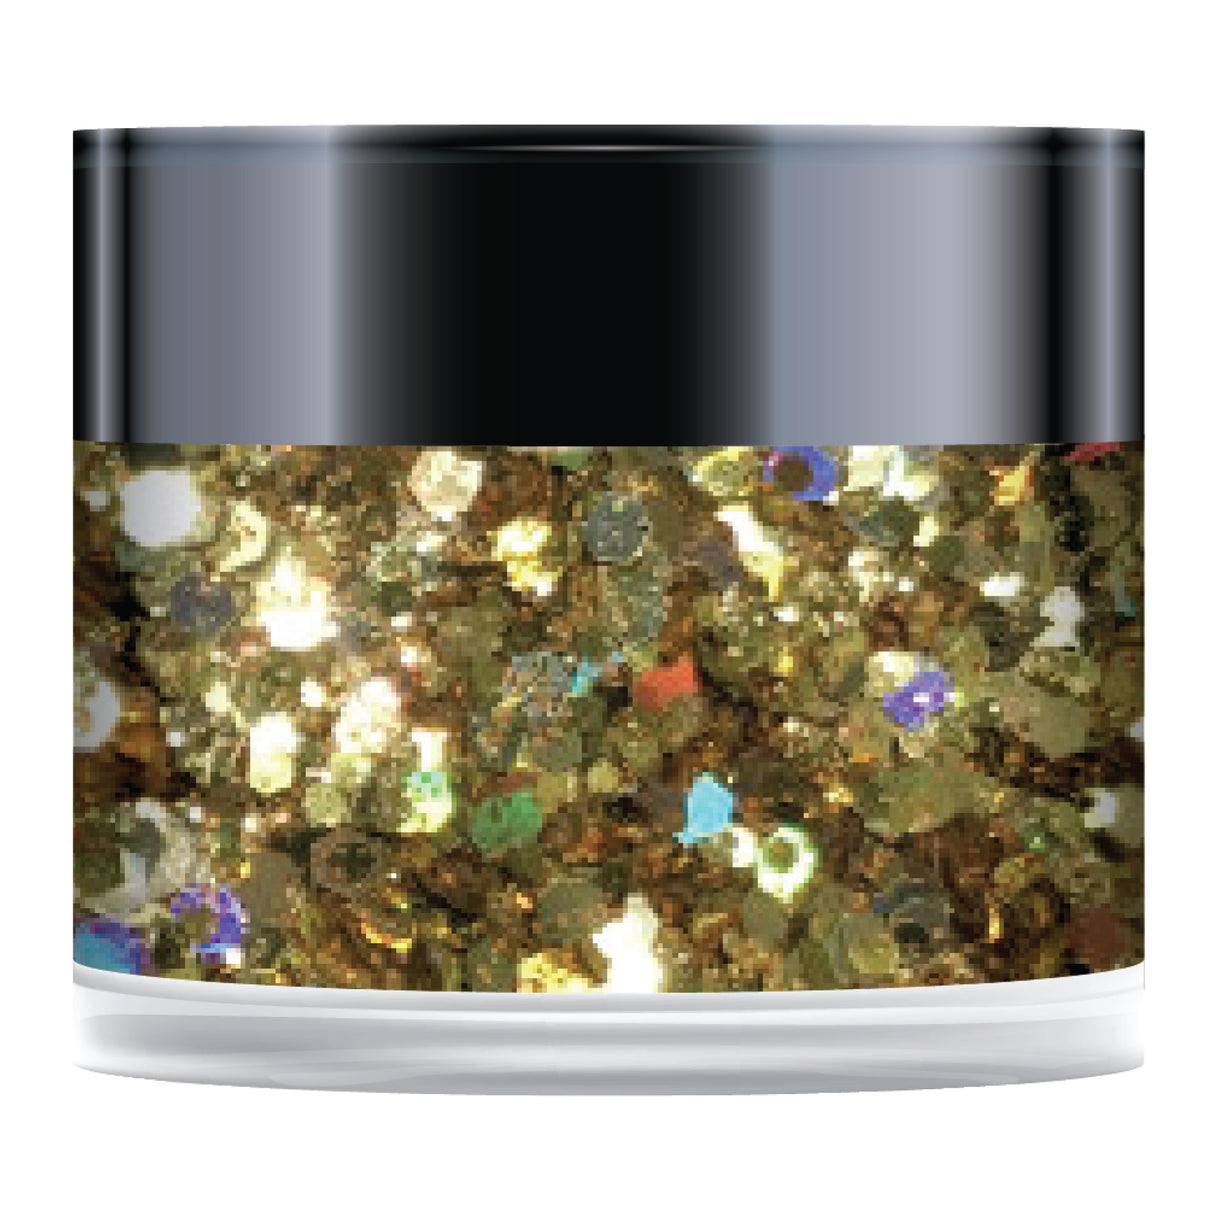 Gold Rush Sparkelicious Glitter 1/2oz Jar